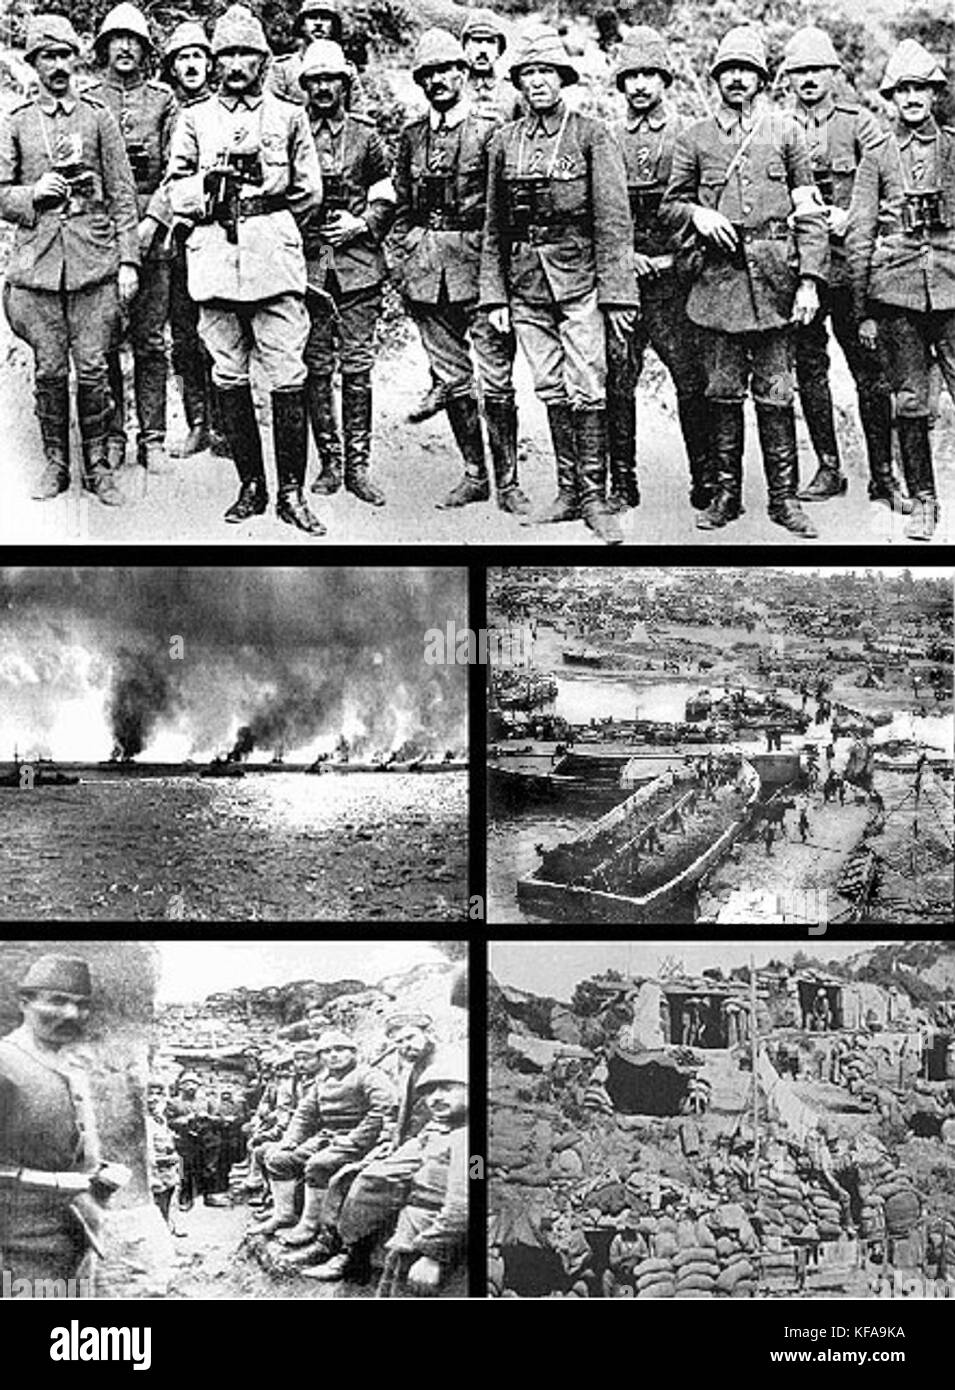 G.C. 18 March 1915 Gallipoli Campaign Article Stock Photo